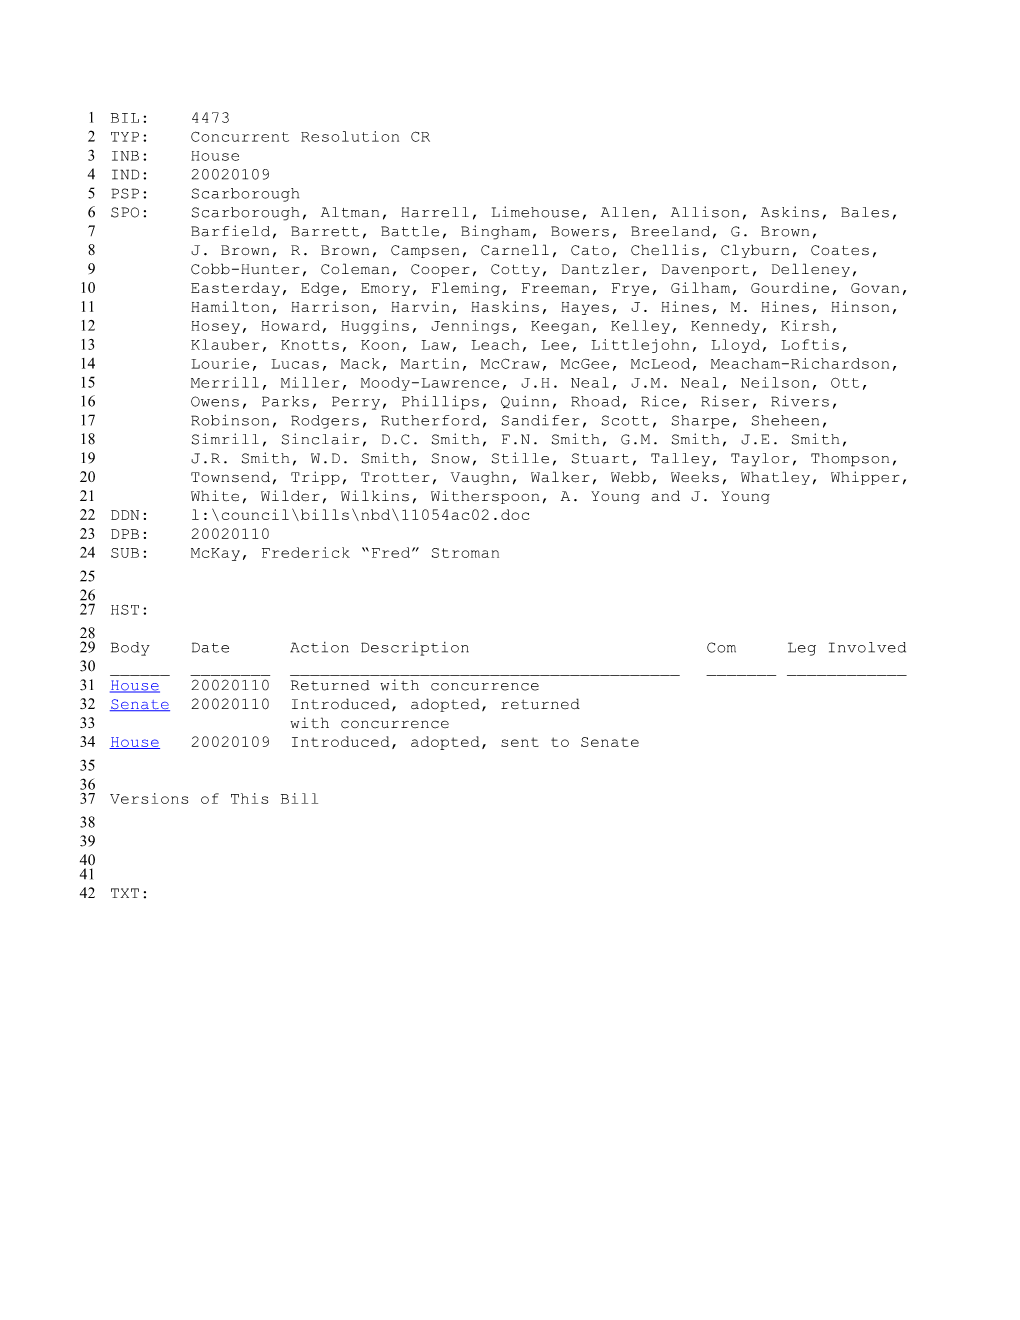 2001-2002 Bill 4473: Mckay, Frederick Fred Stroman - South Carolina Legislature Online